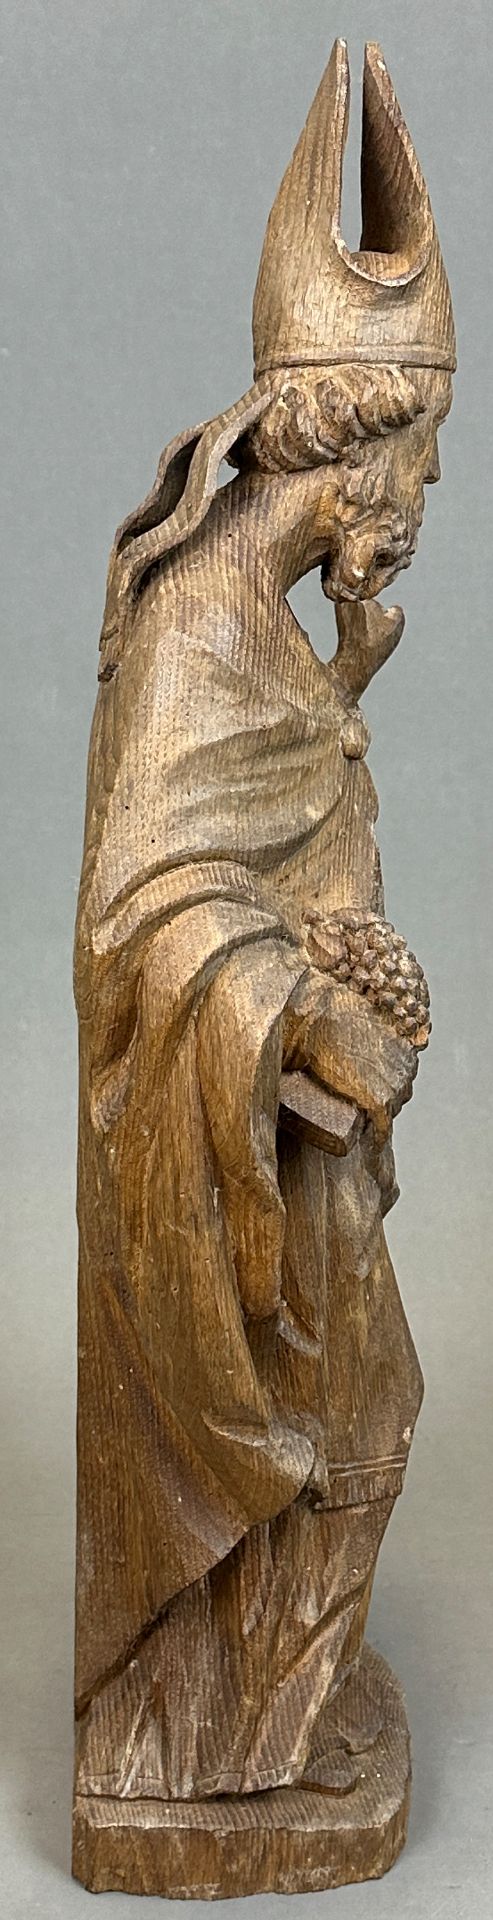 Florian SENONER (XX). Wooden figure. St Urban. Around 1900. Germany. - Image 4 of 9